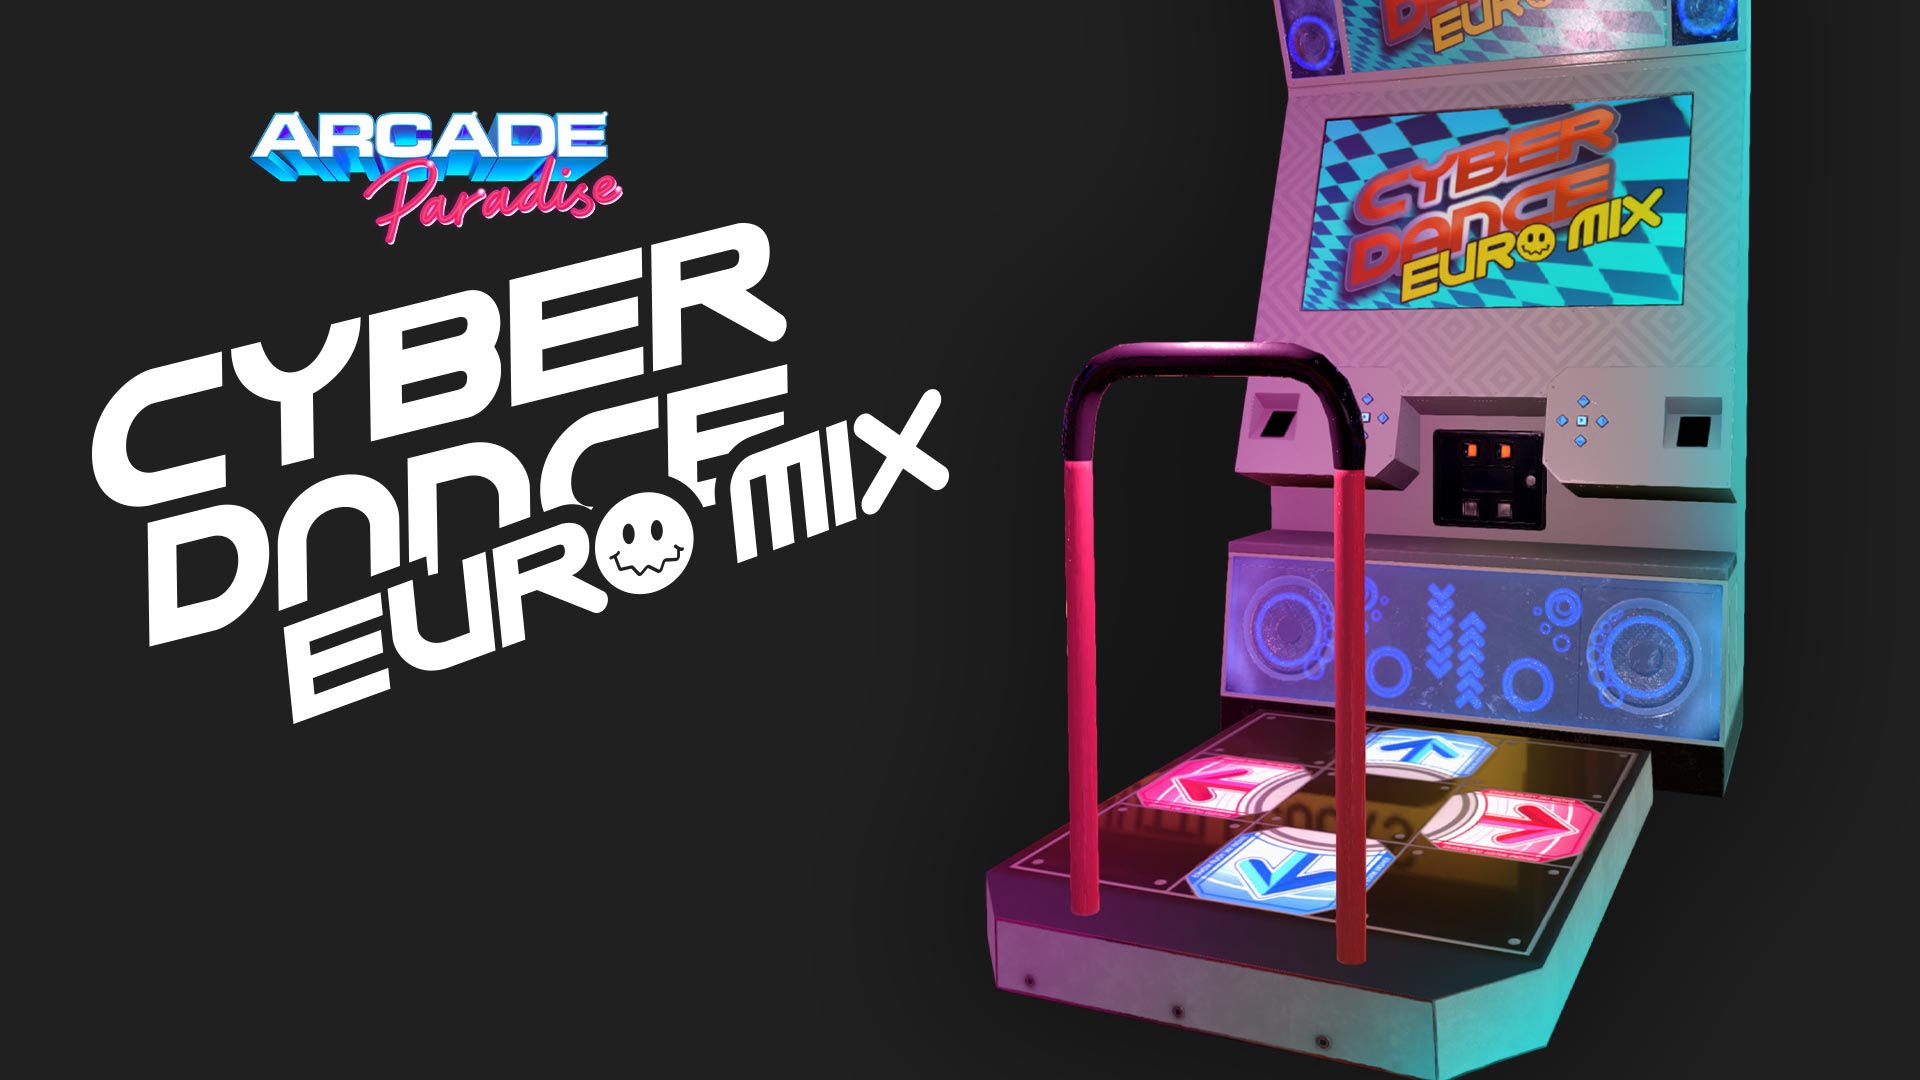 Arcade Paradise - CyberDance EuroMix DLC